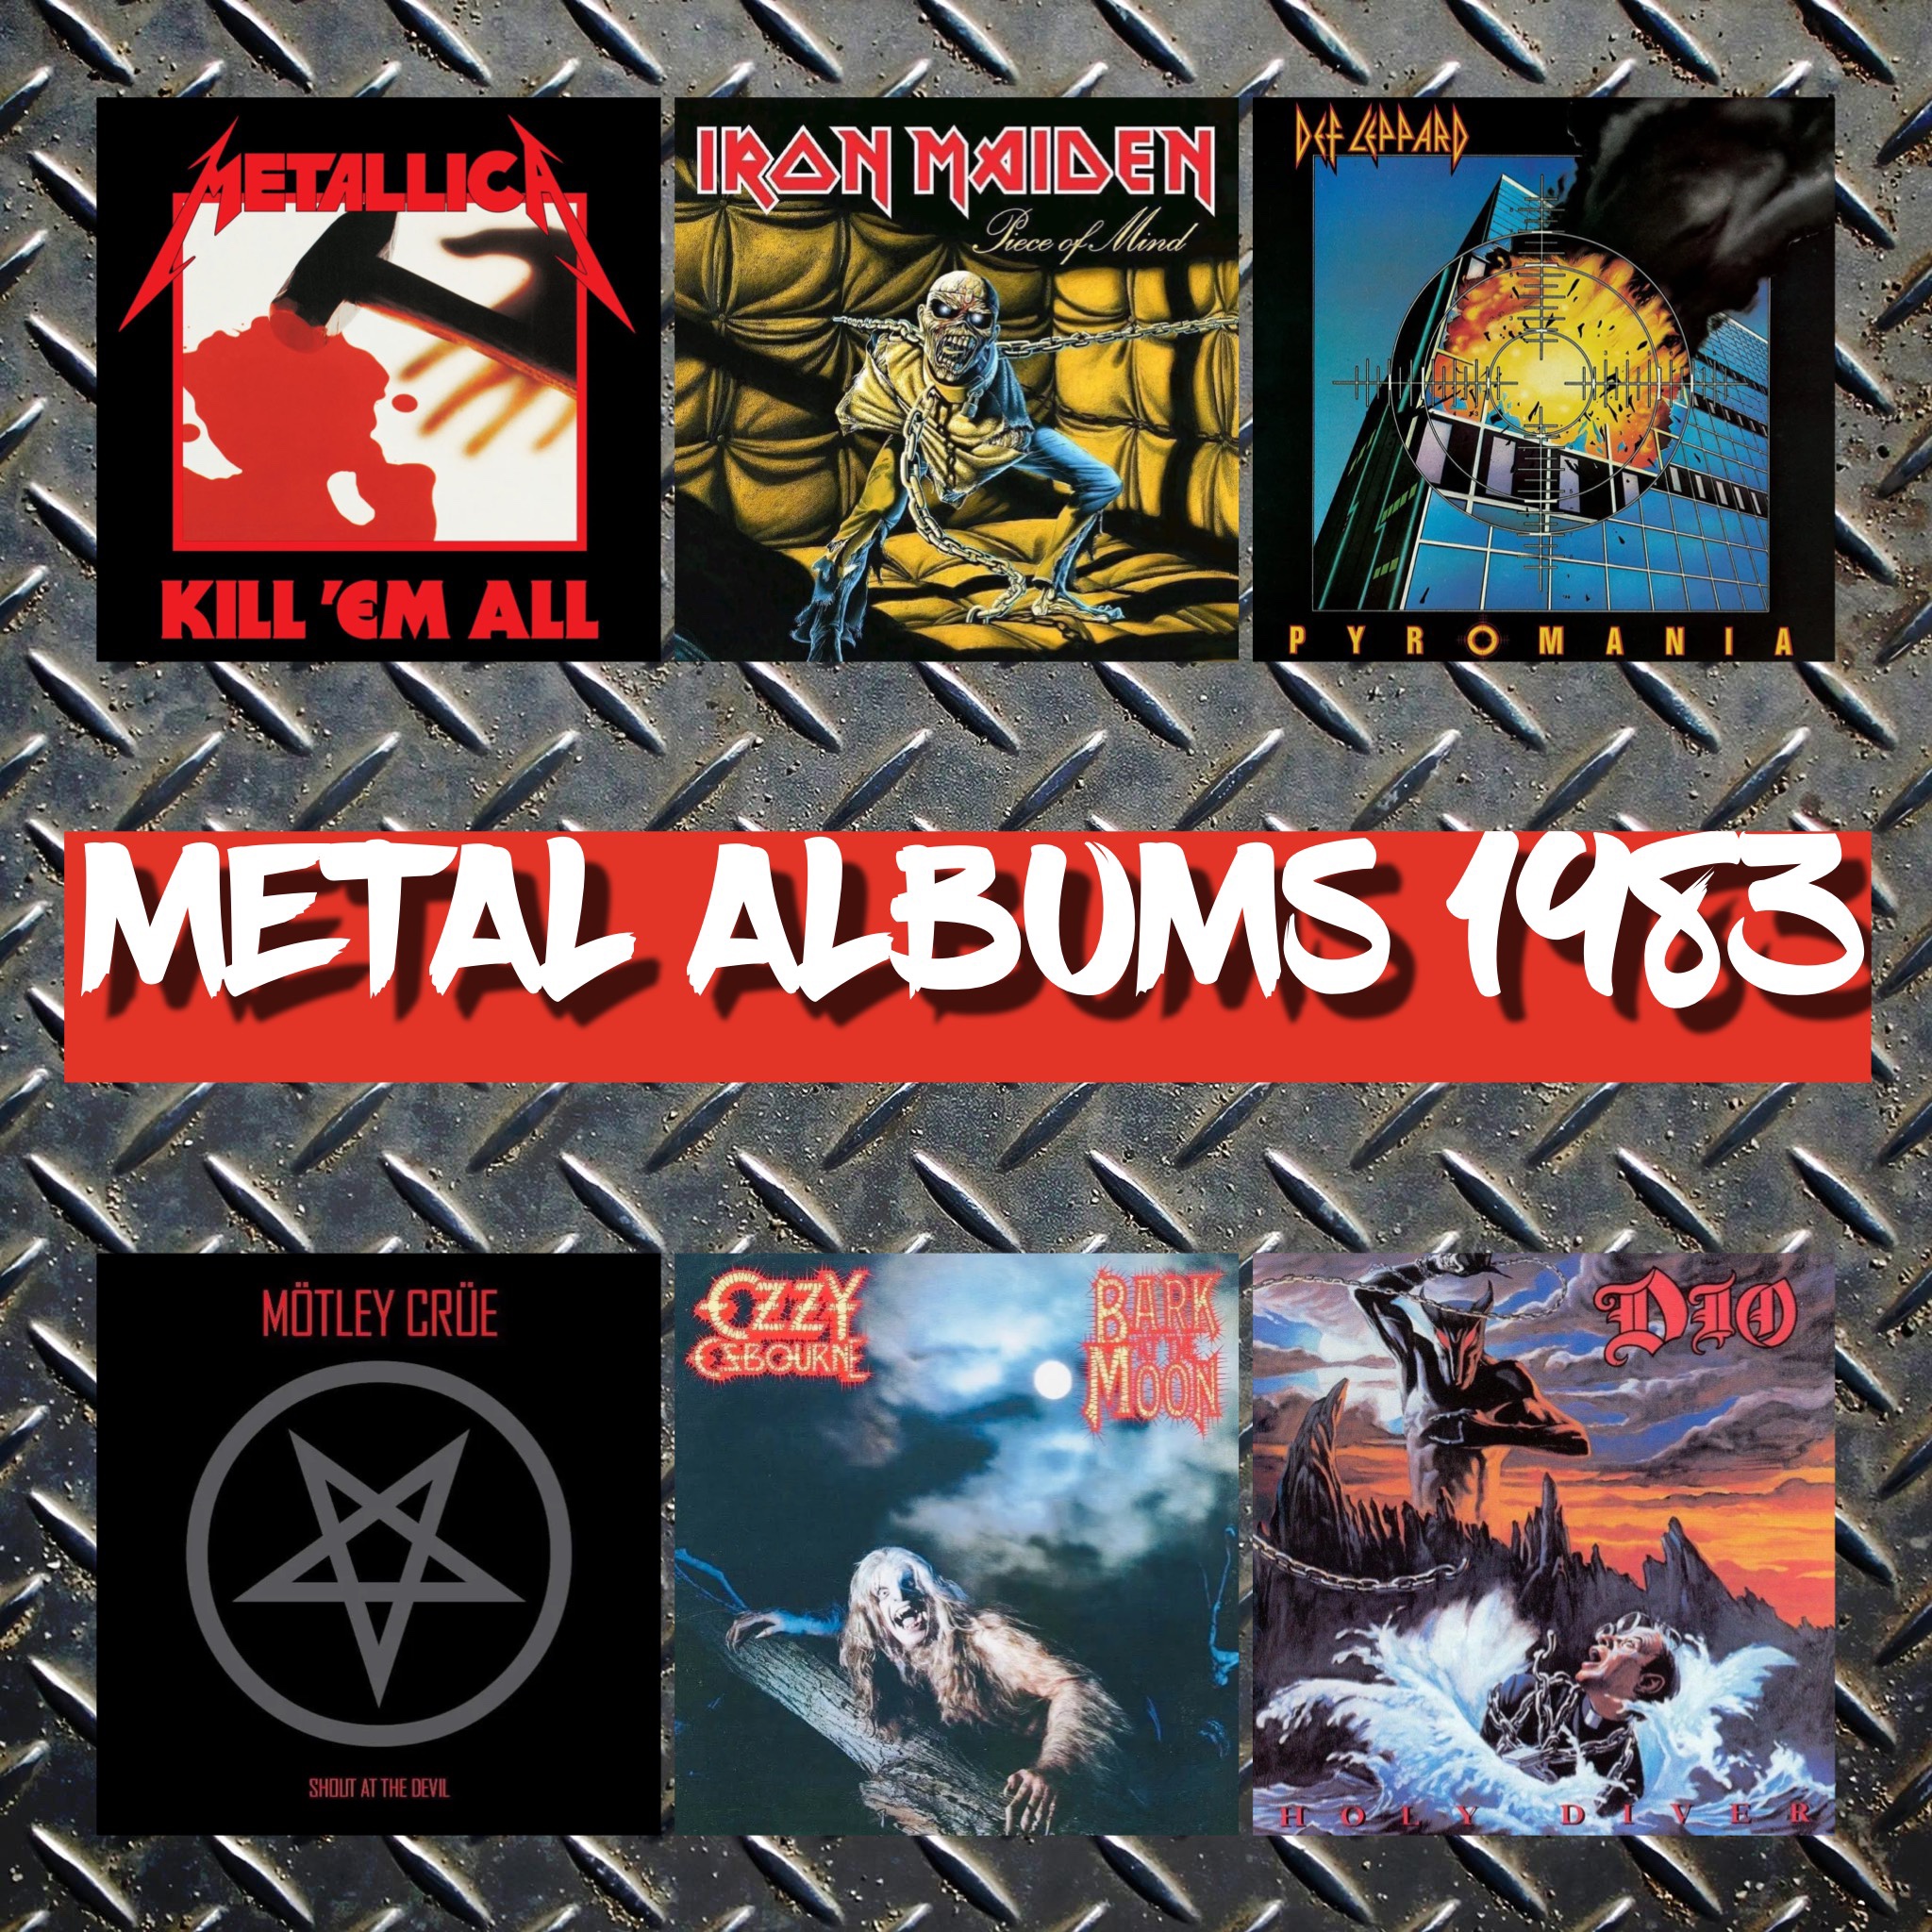 METAL ALBUMS 1983